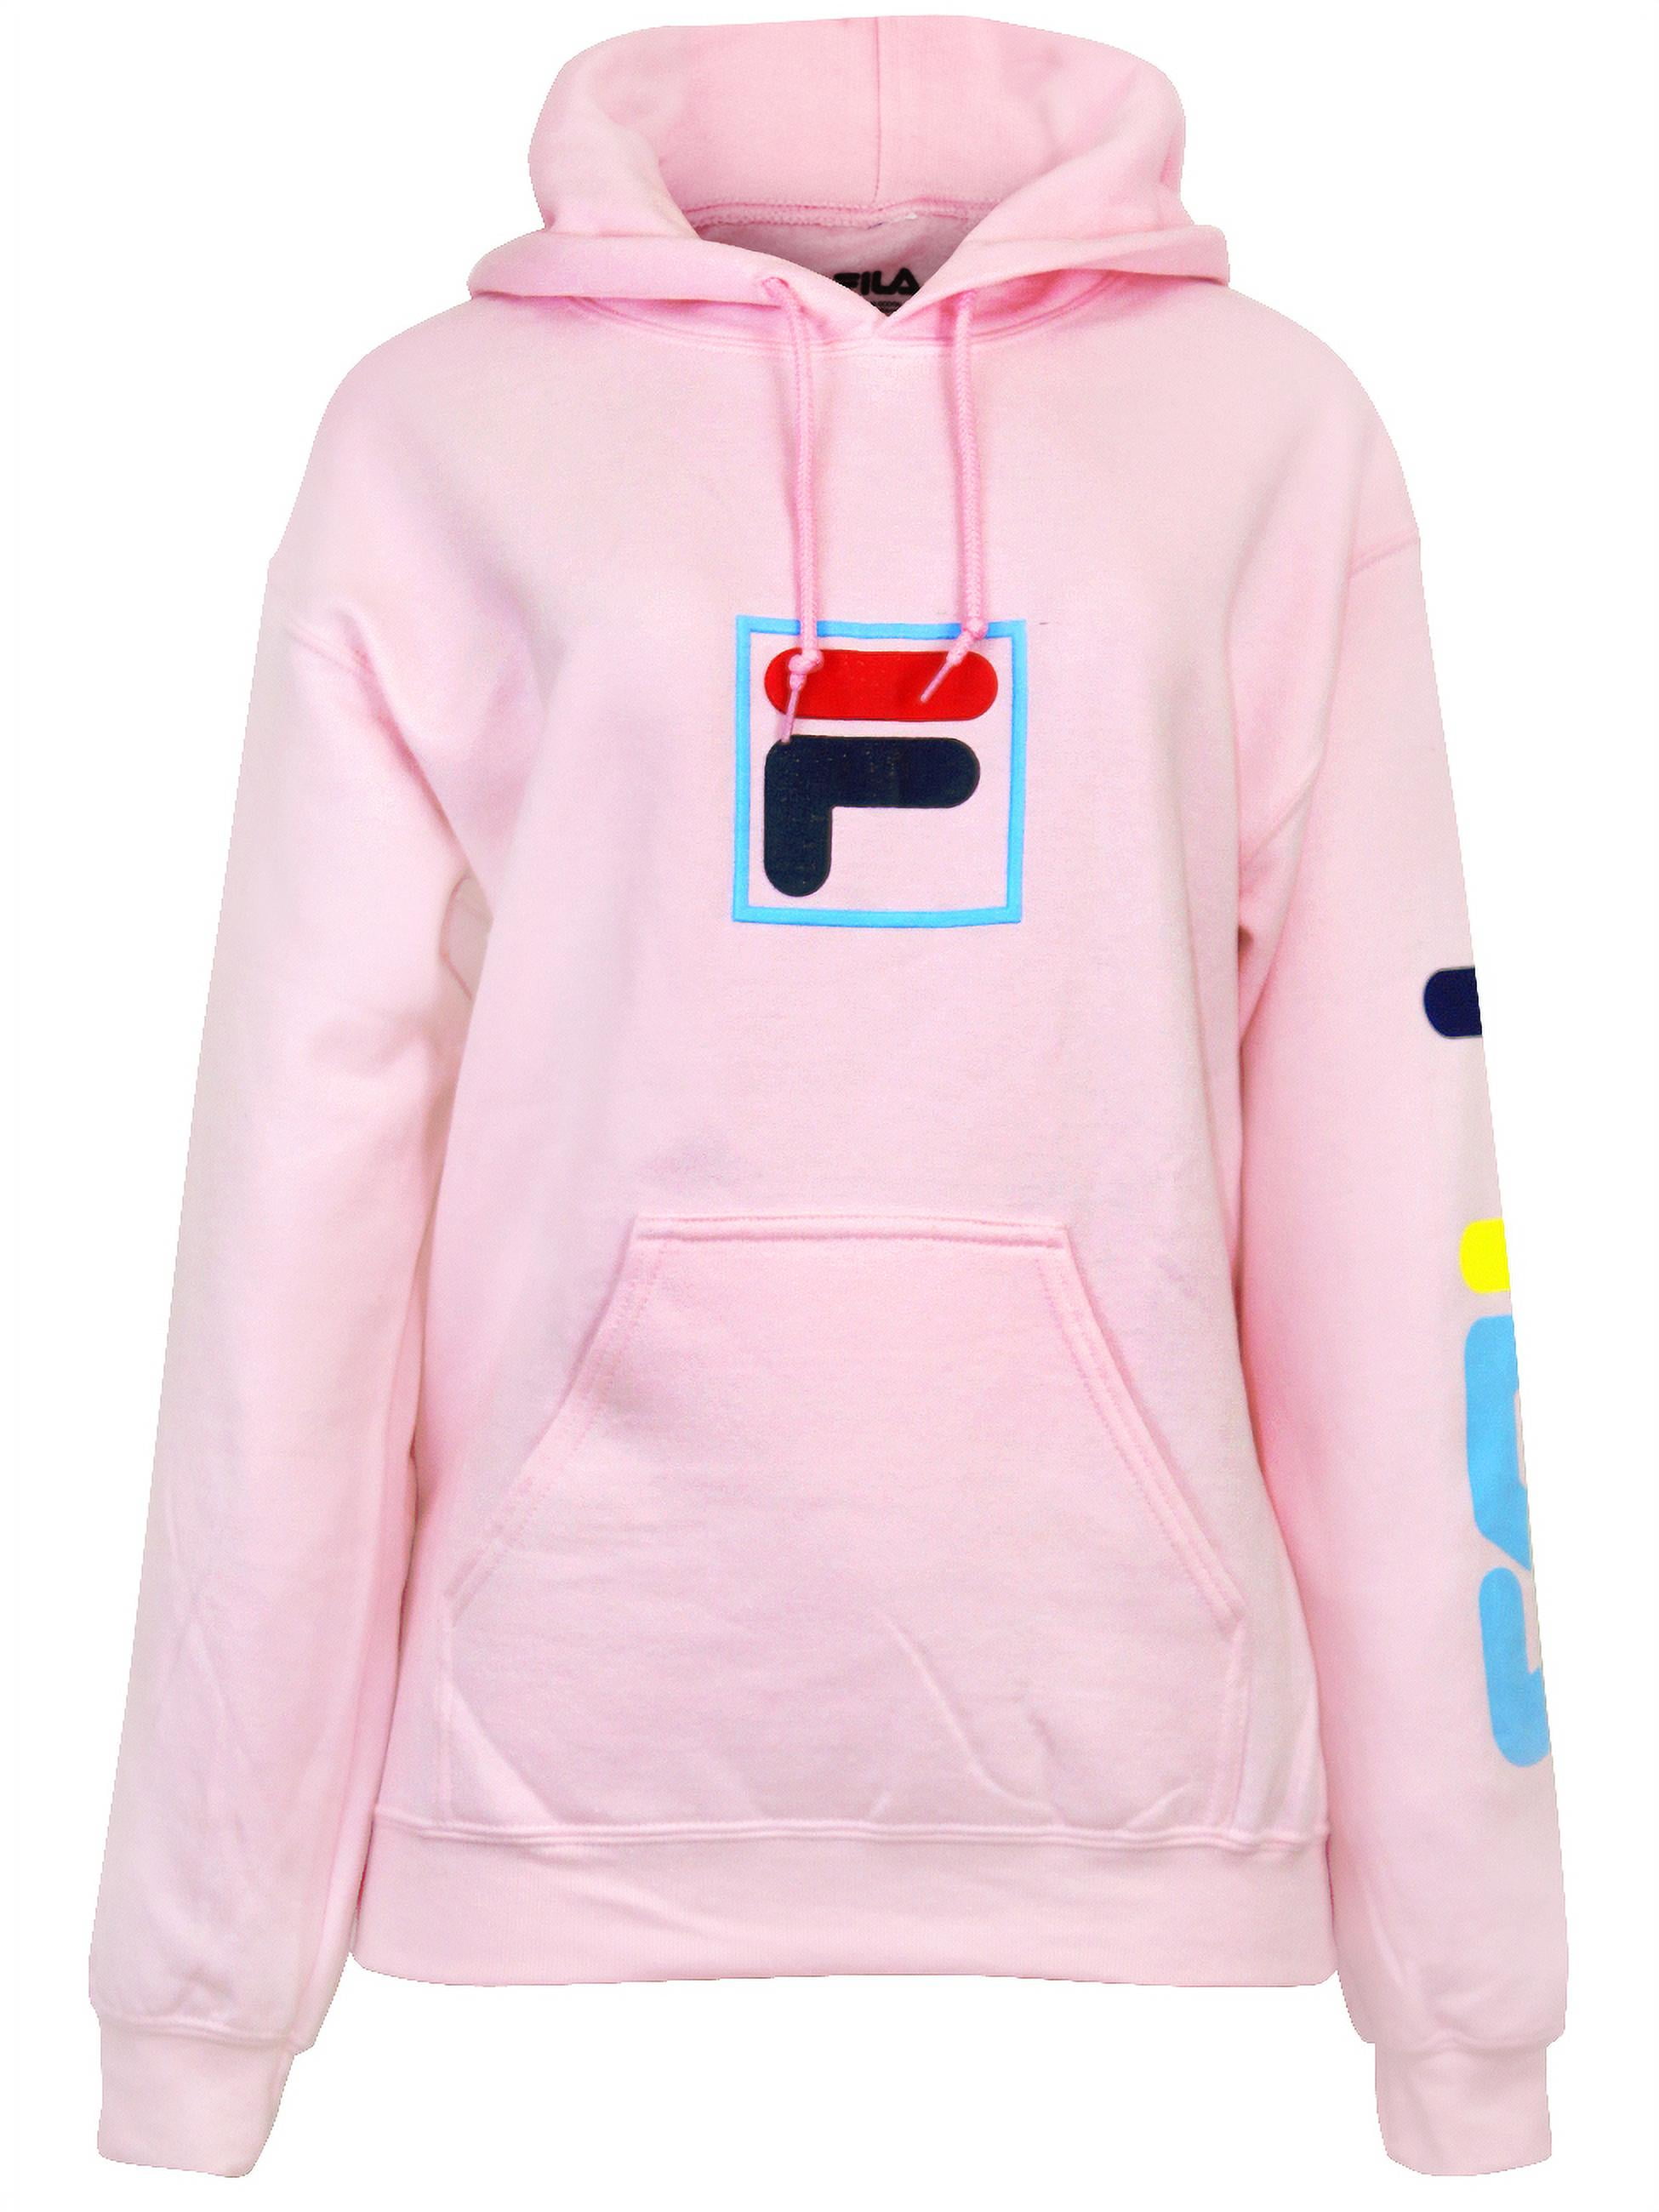 Fila Women's Graphic Hoodie with Pocket Light Pink - Walmart.com